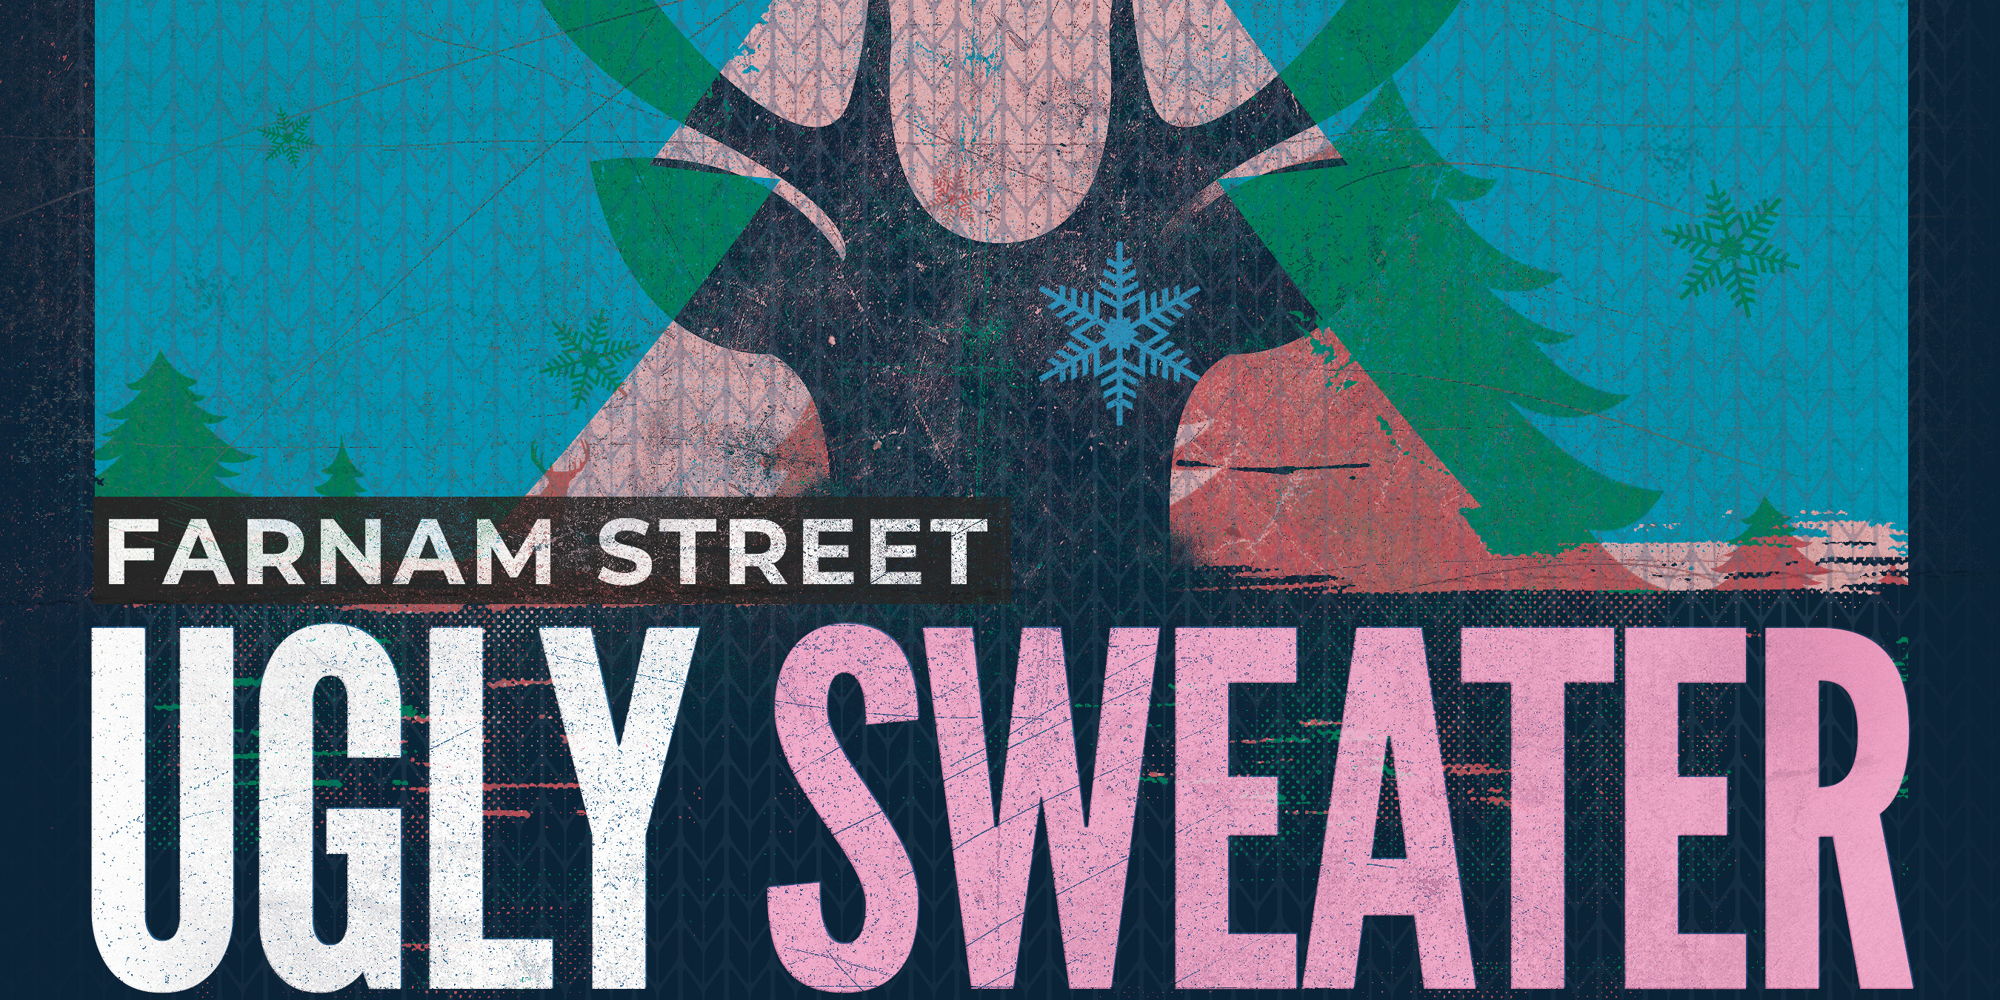 Farnam Ugly Sweater Crawl promotional image